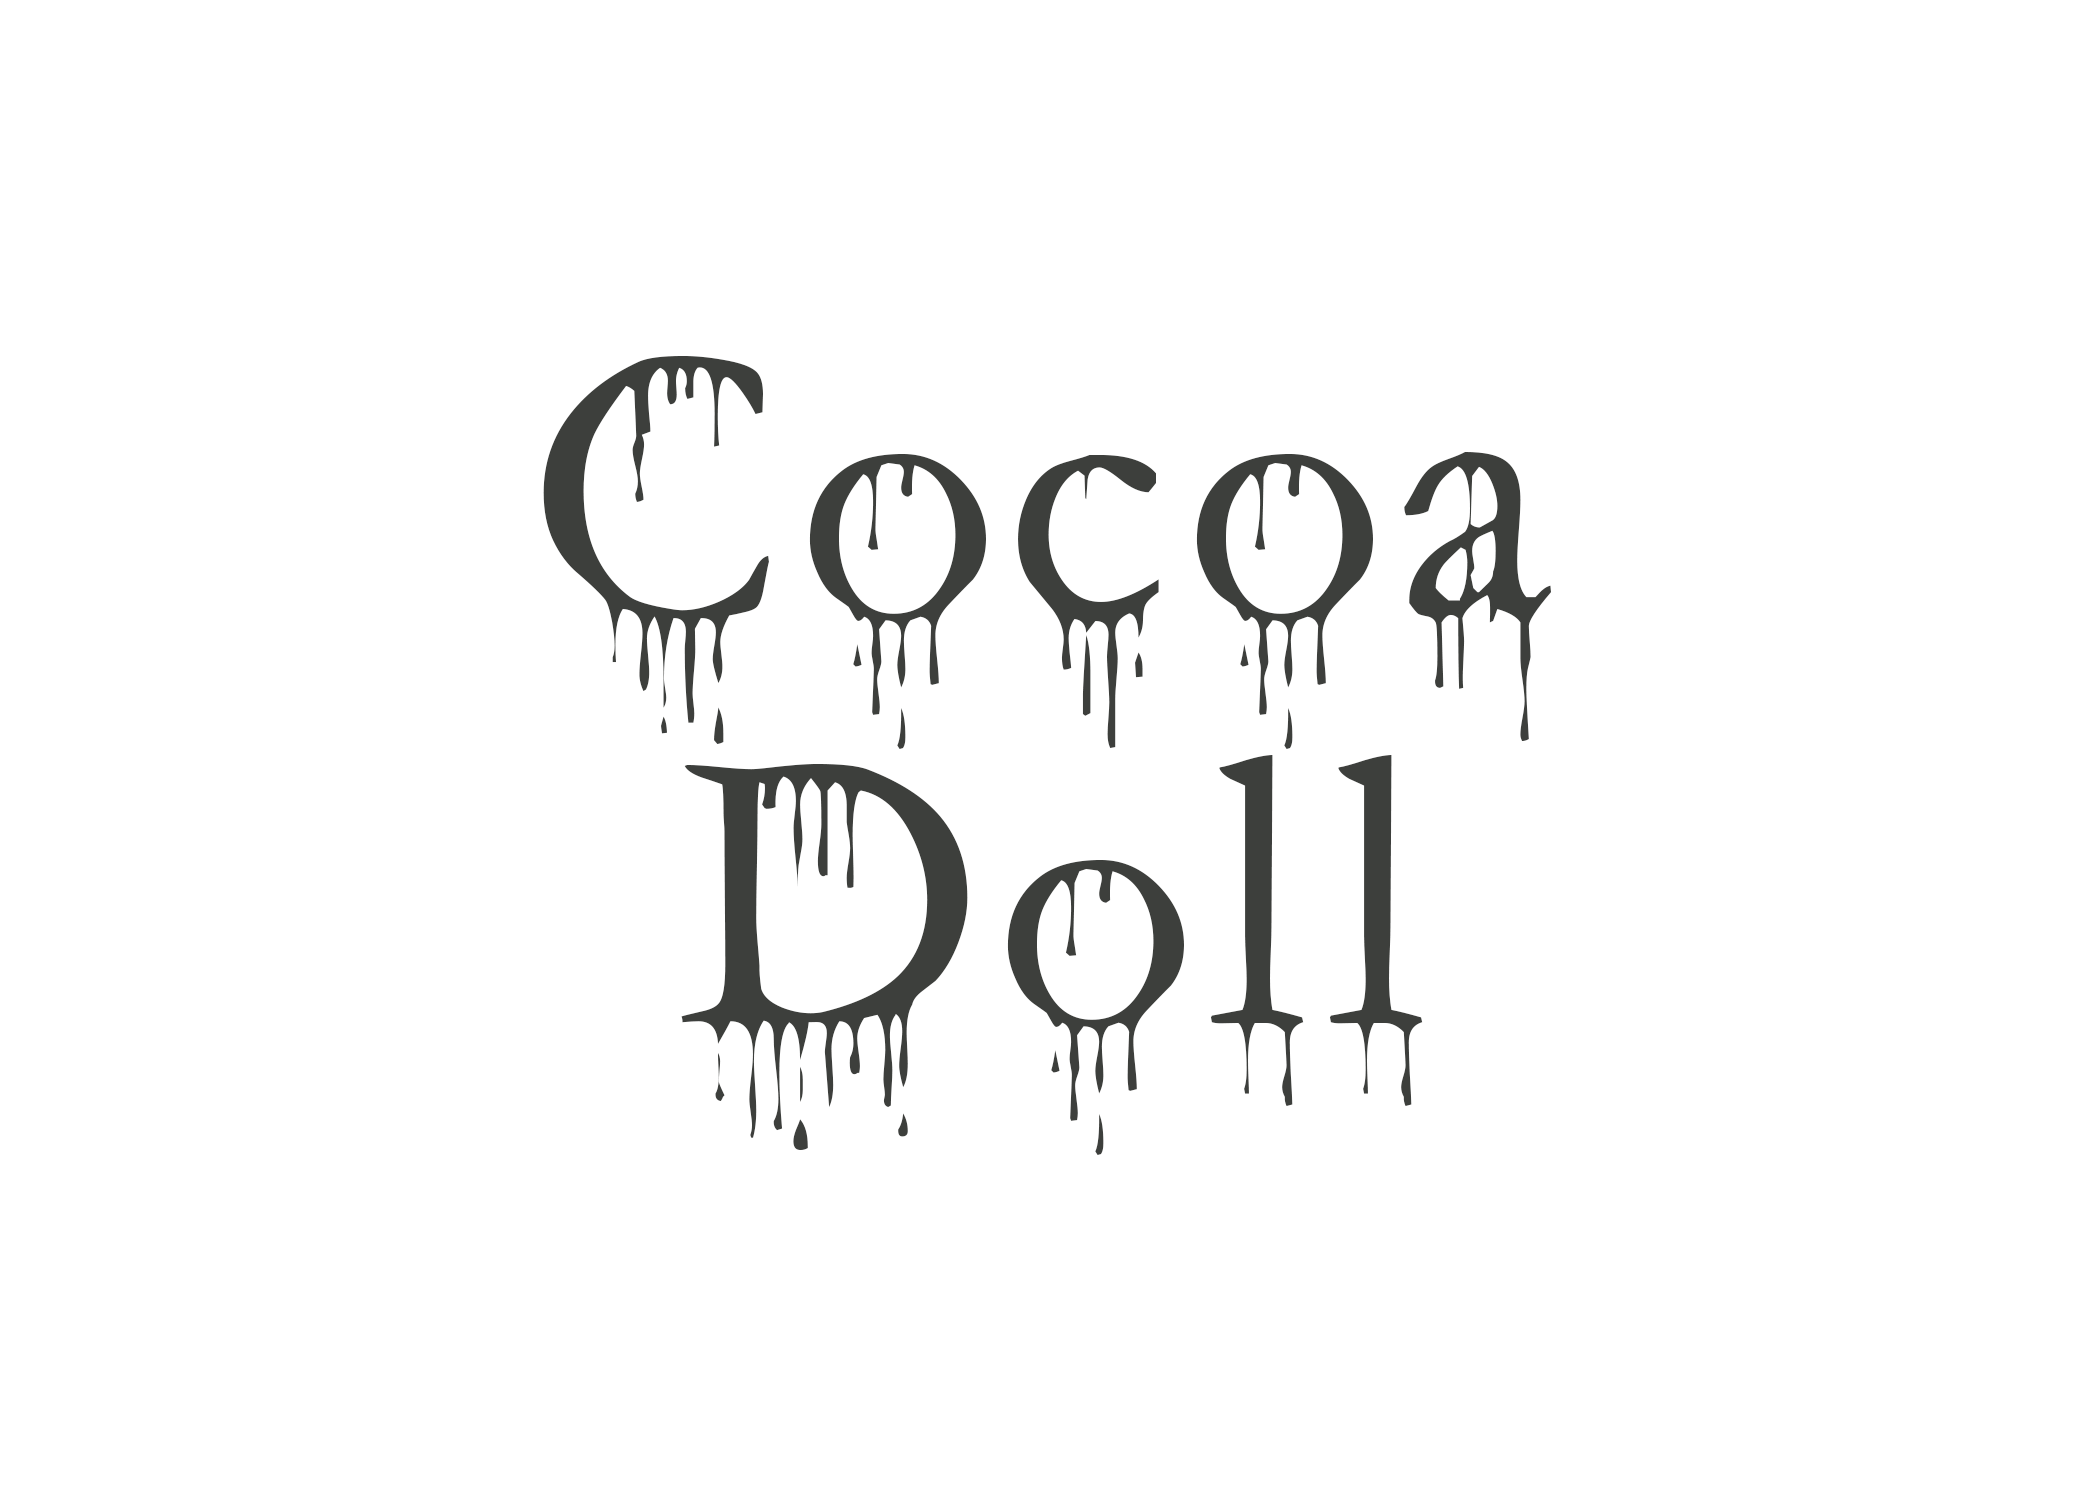 Cocoa Doll title